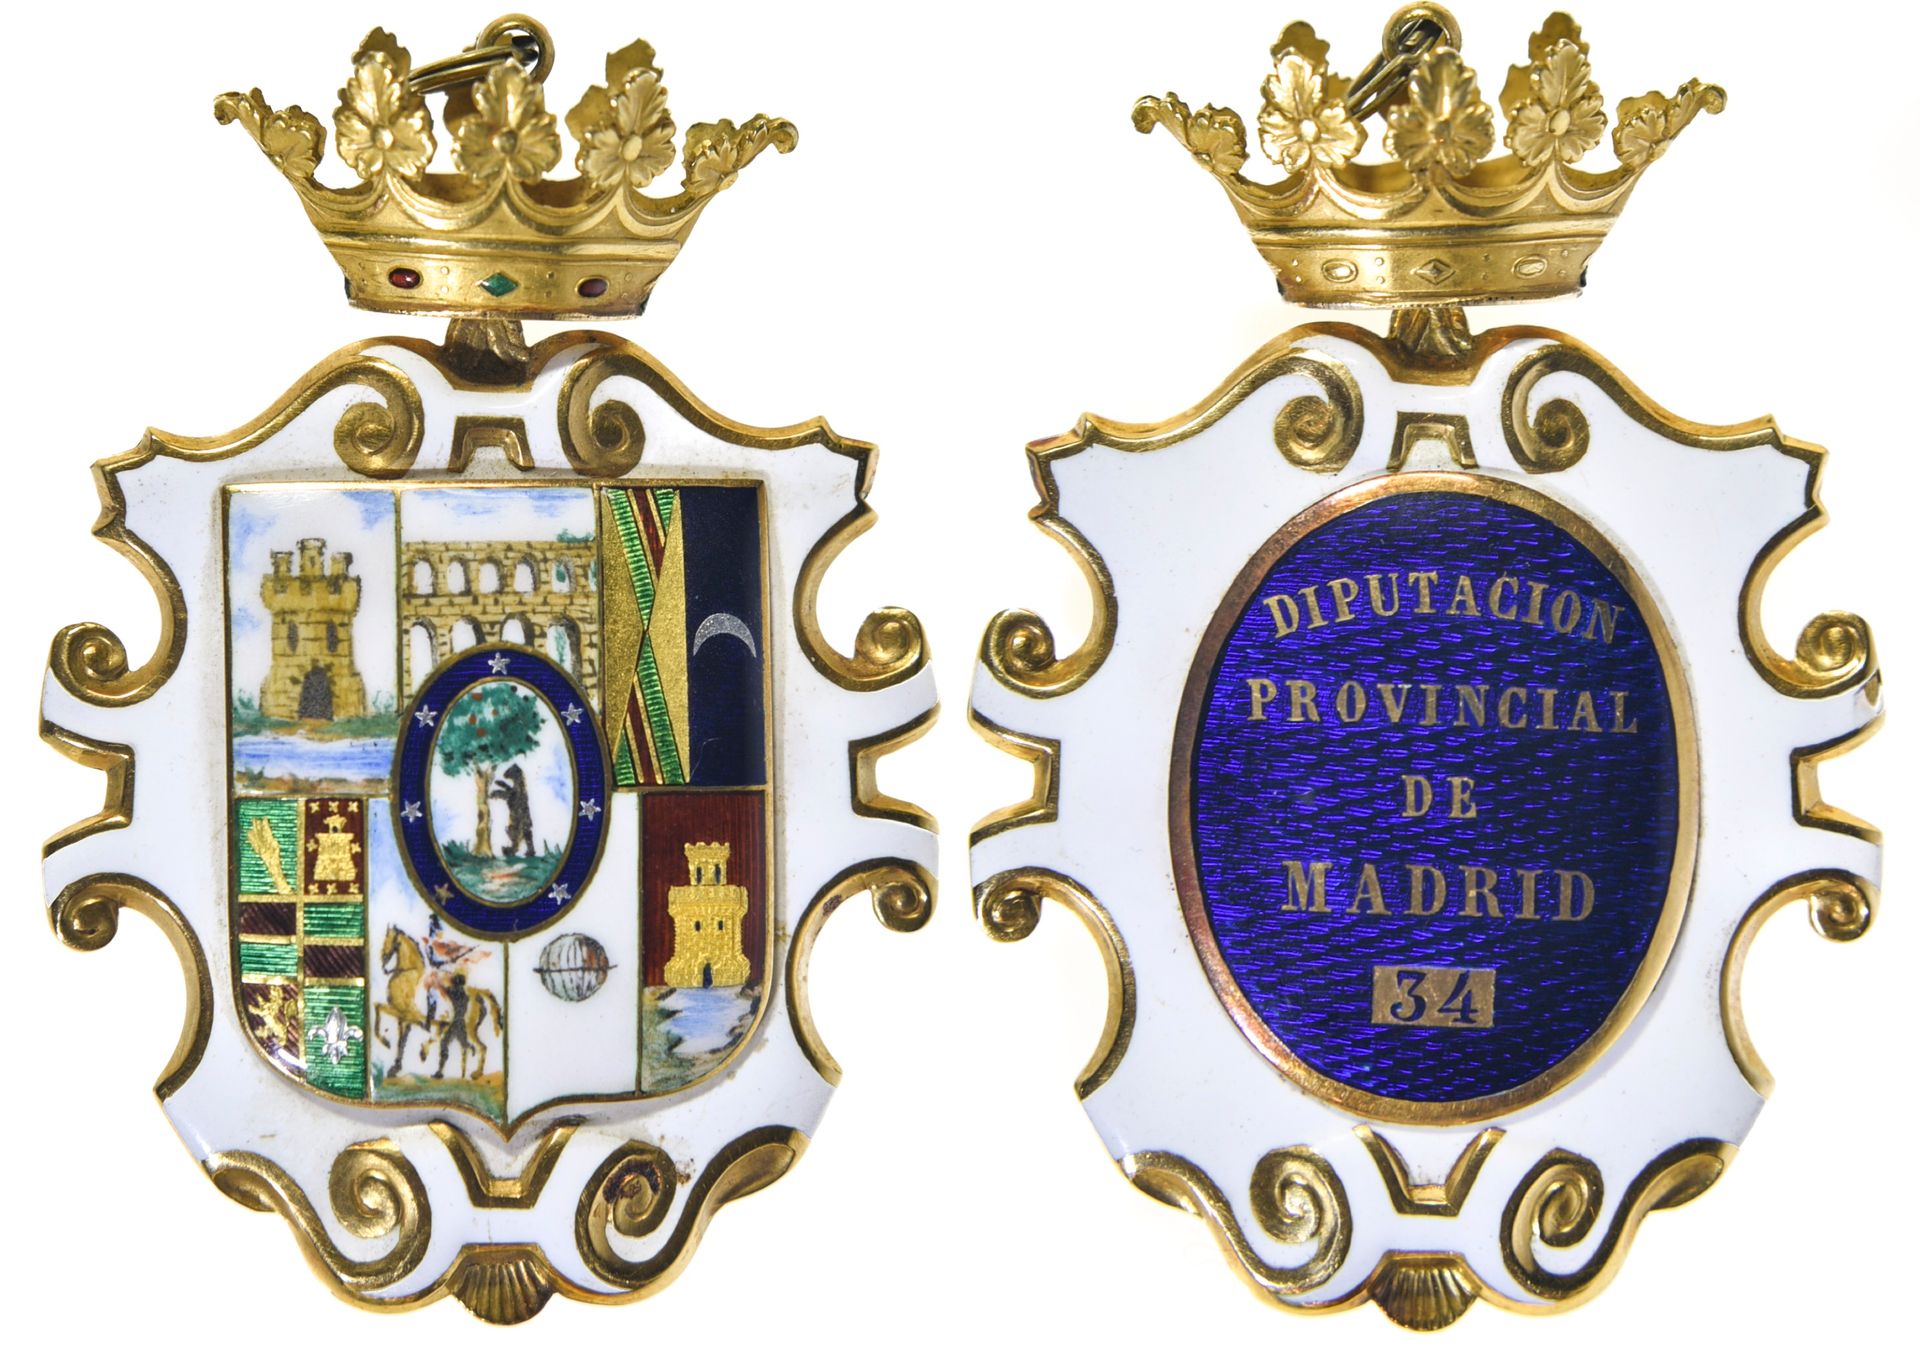 Badge de député provincial, ESPAÑA, MADRID

Insignia de un diputado provincial,
&hellip;